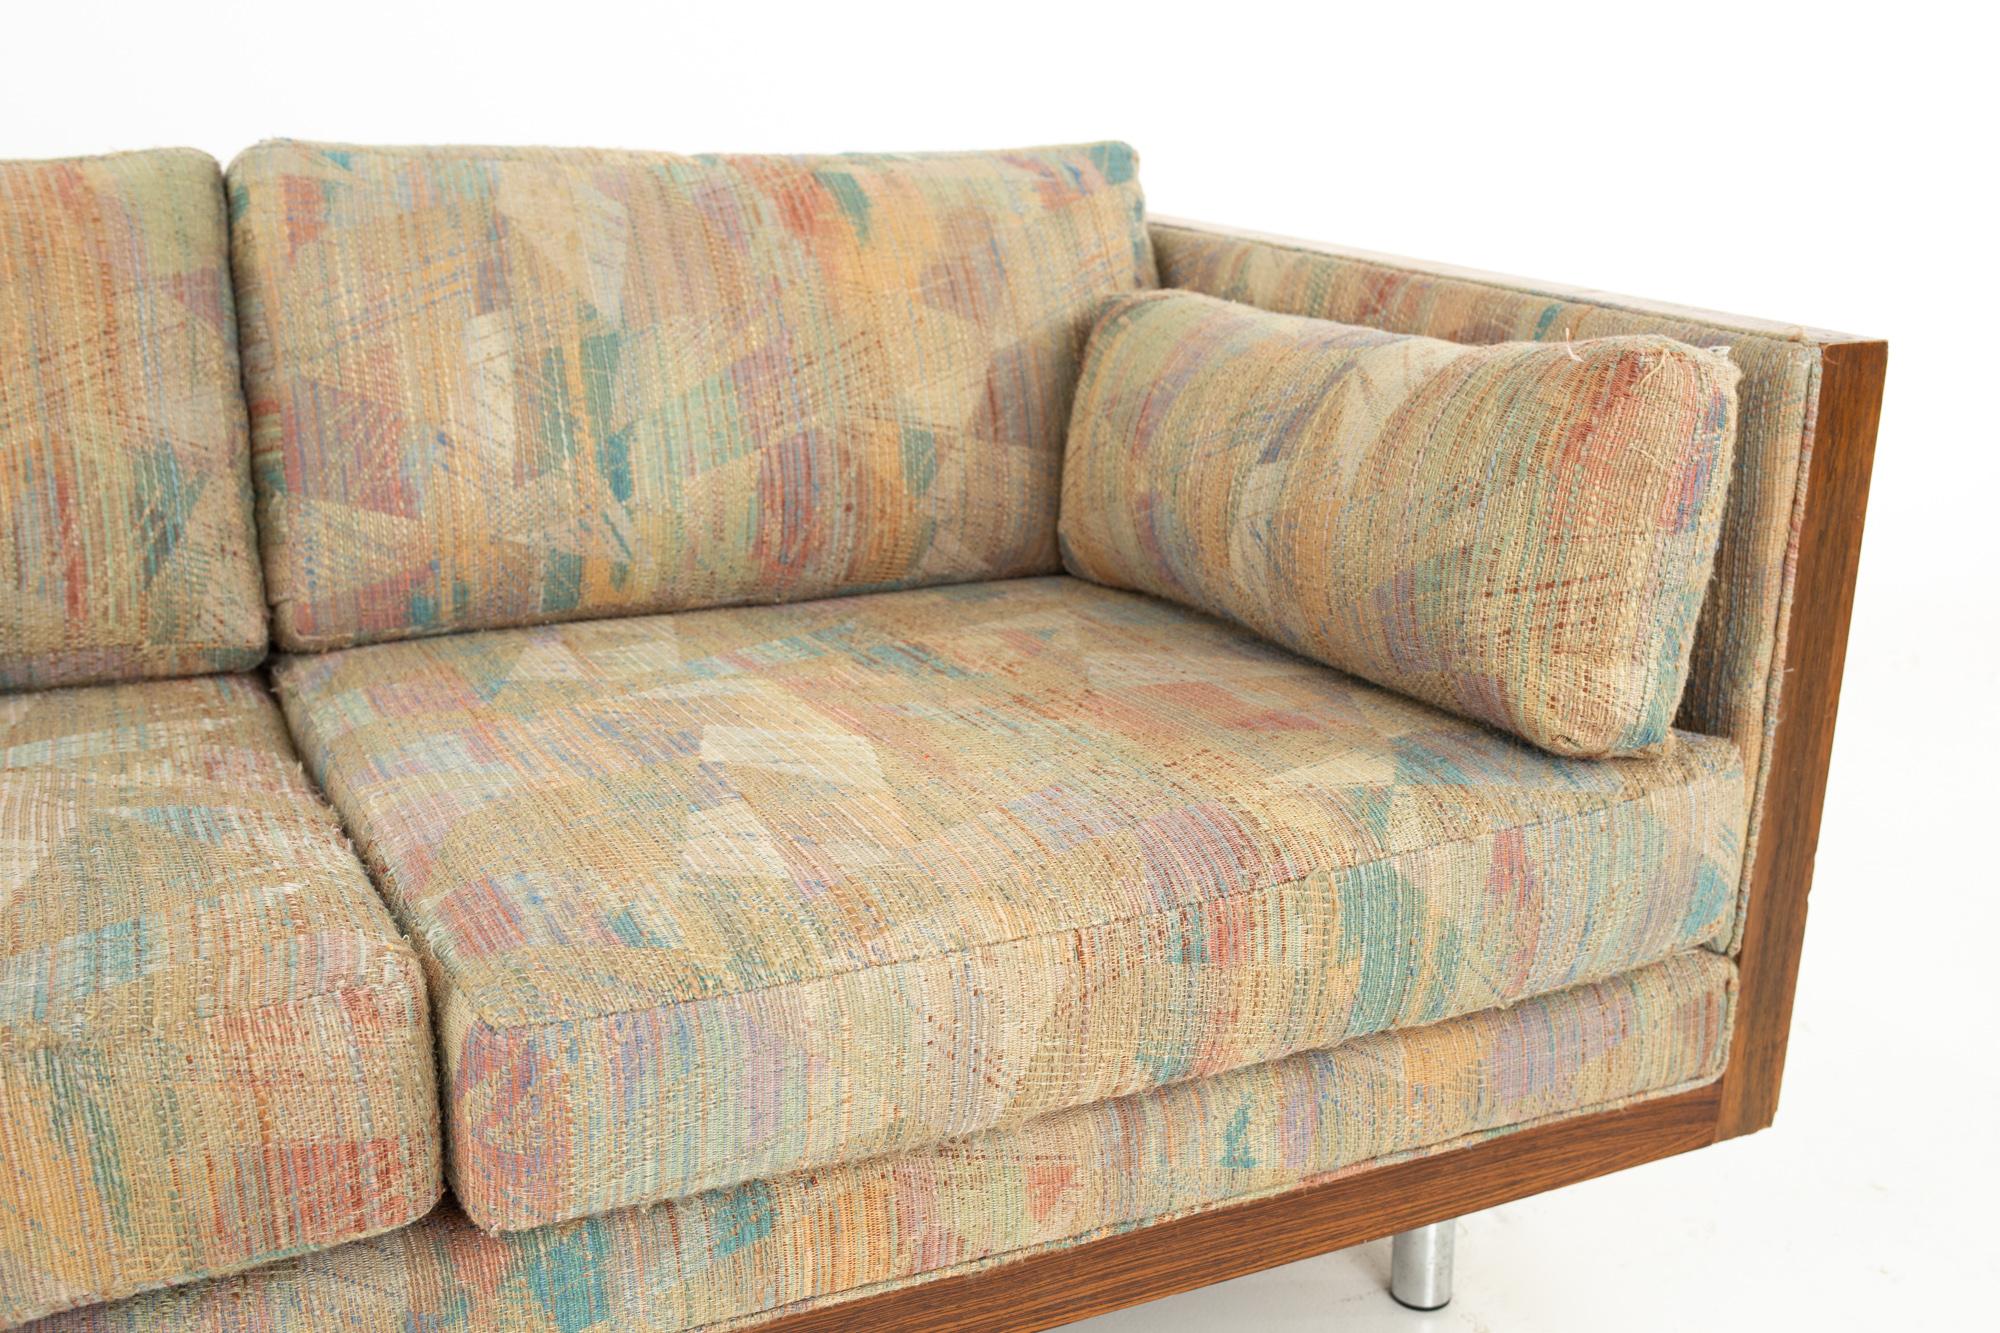 Upholstery Milo Baughman Style Mid Century Rosewood Case Sofa